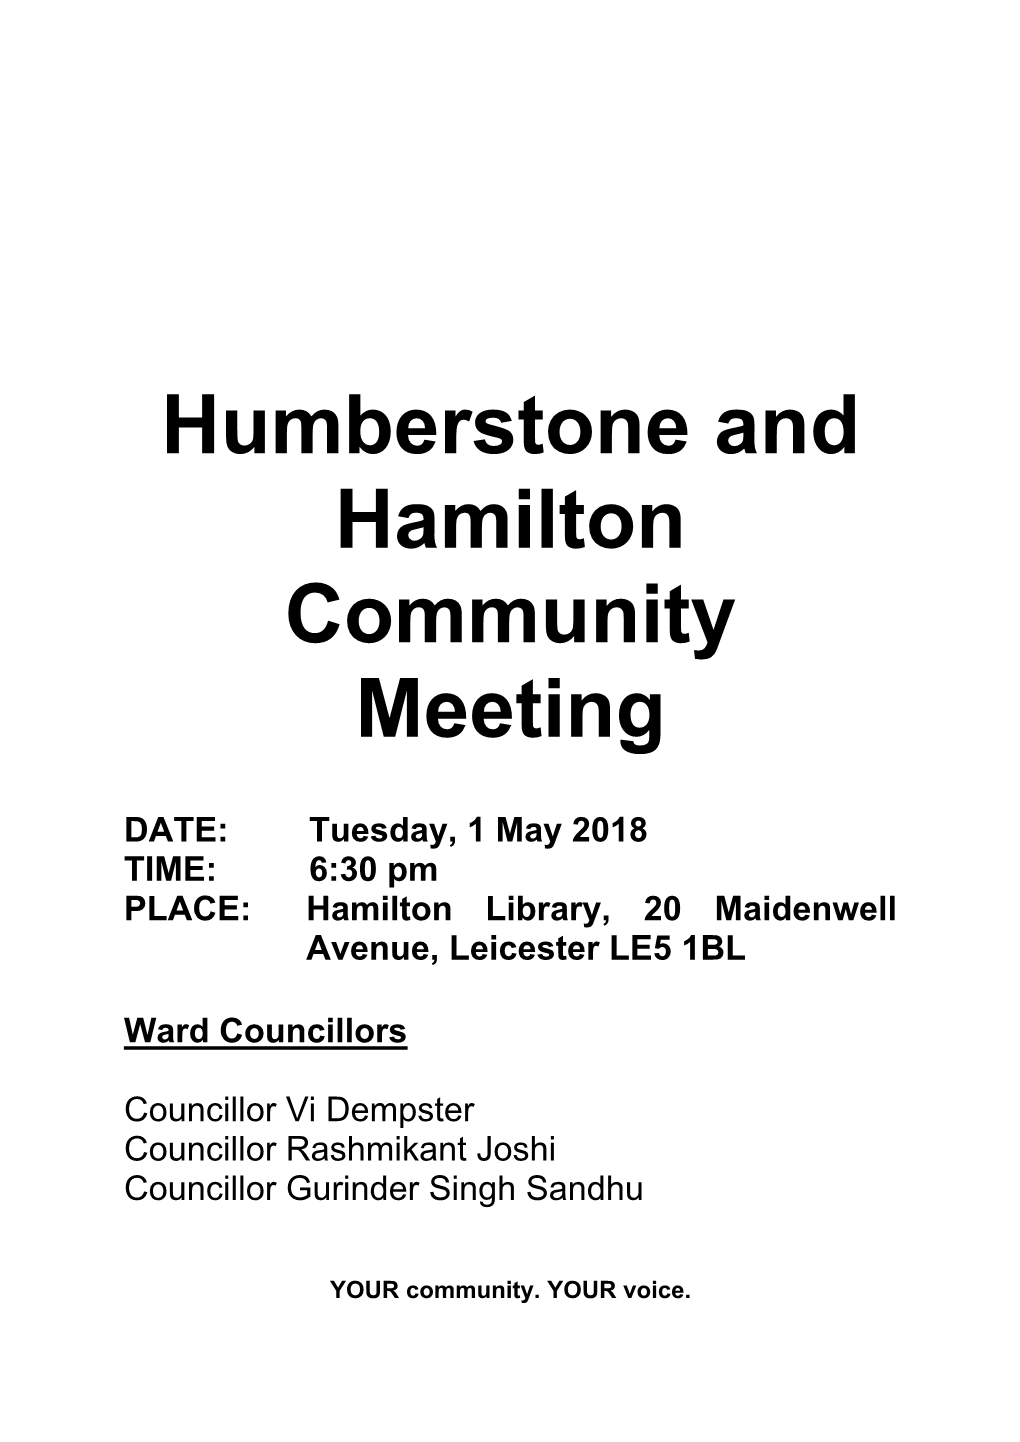 Humberstone and Hamilton Community Meeting